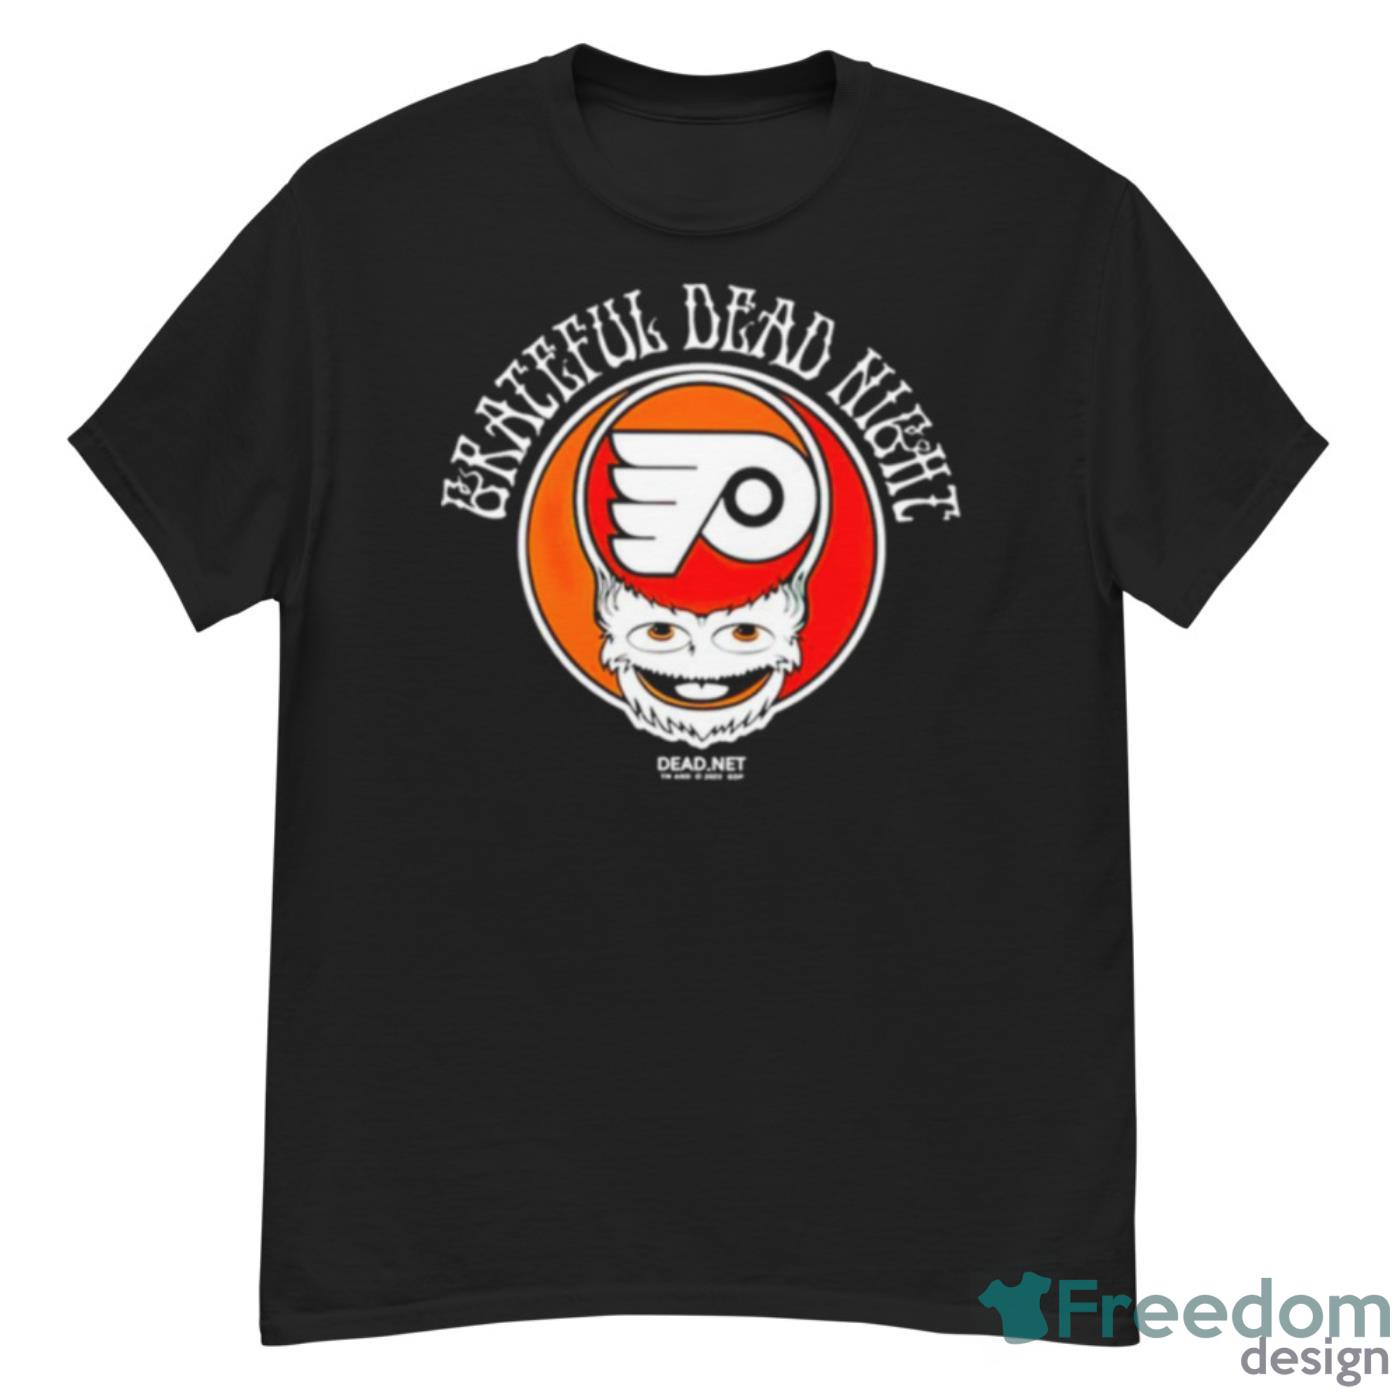 Grateful Dead Night Philadelphia Flyers Shirt - Freedomdesign